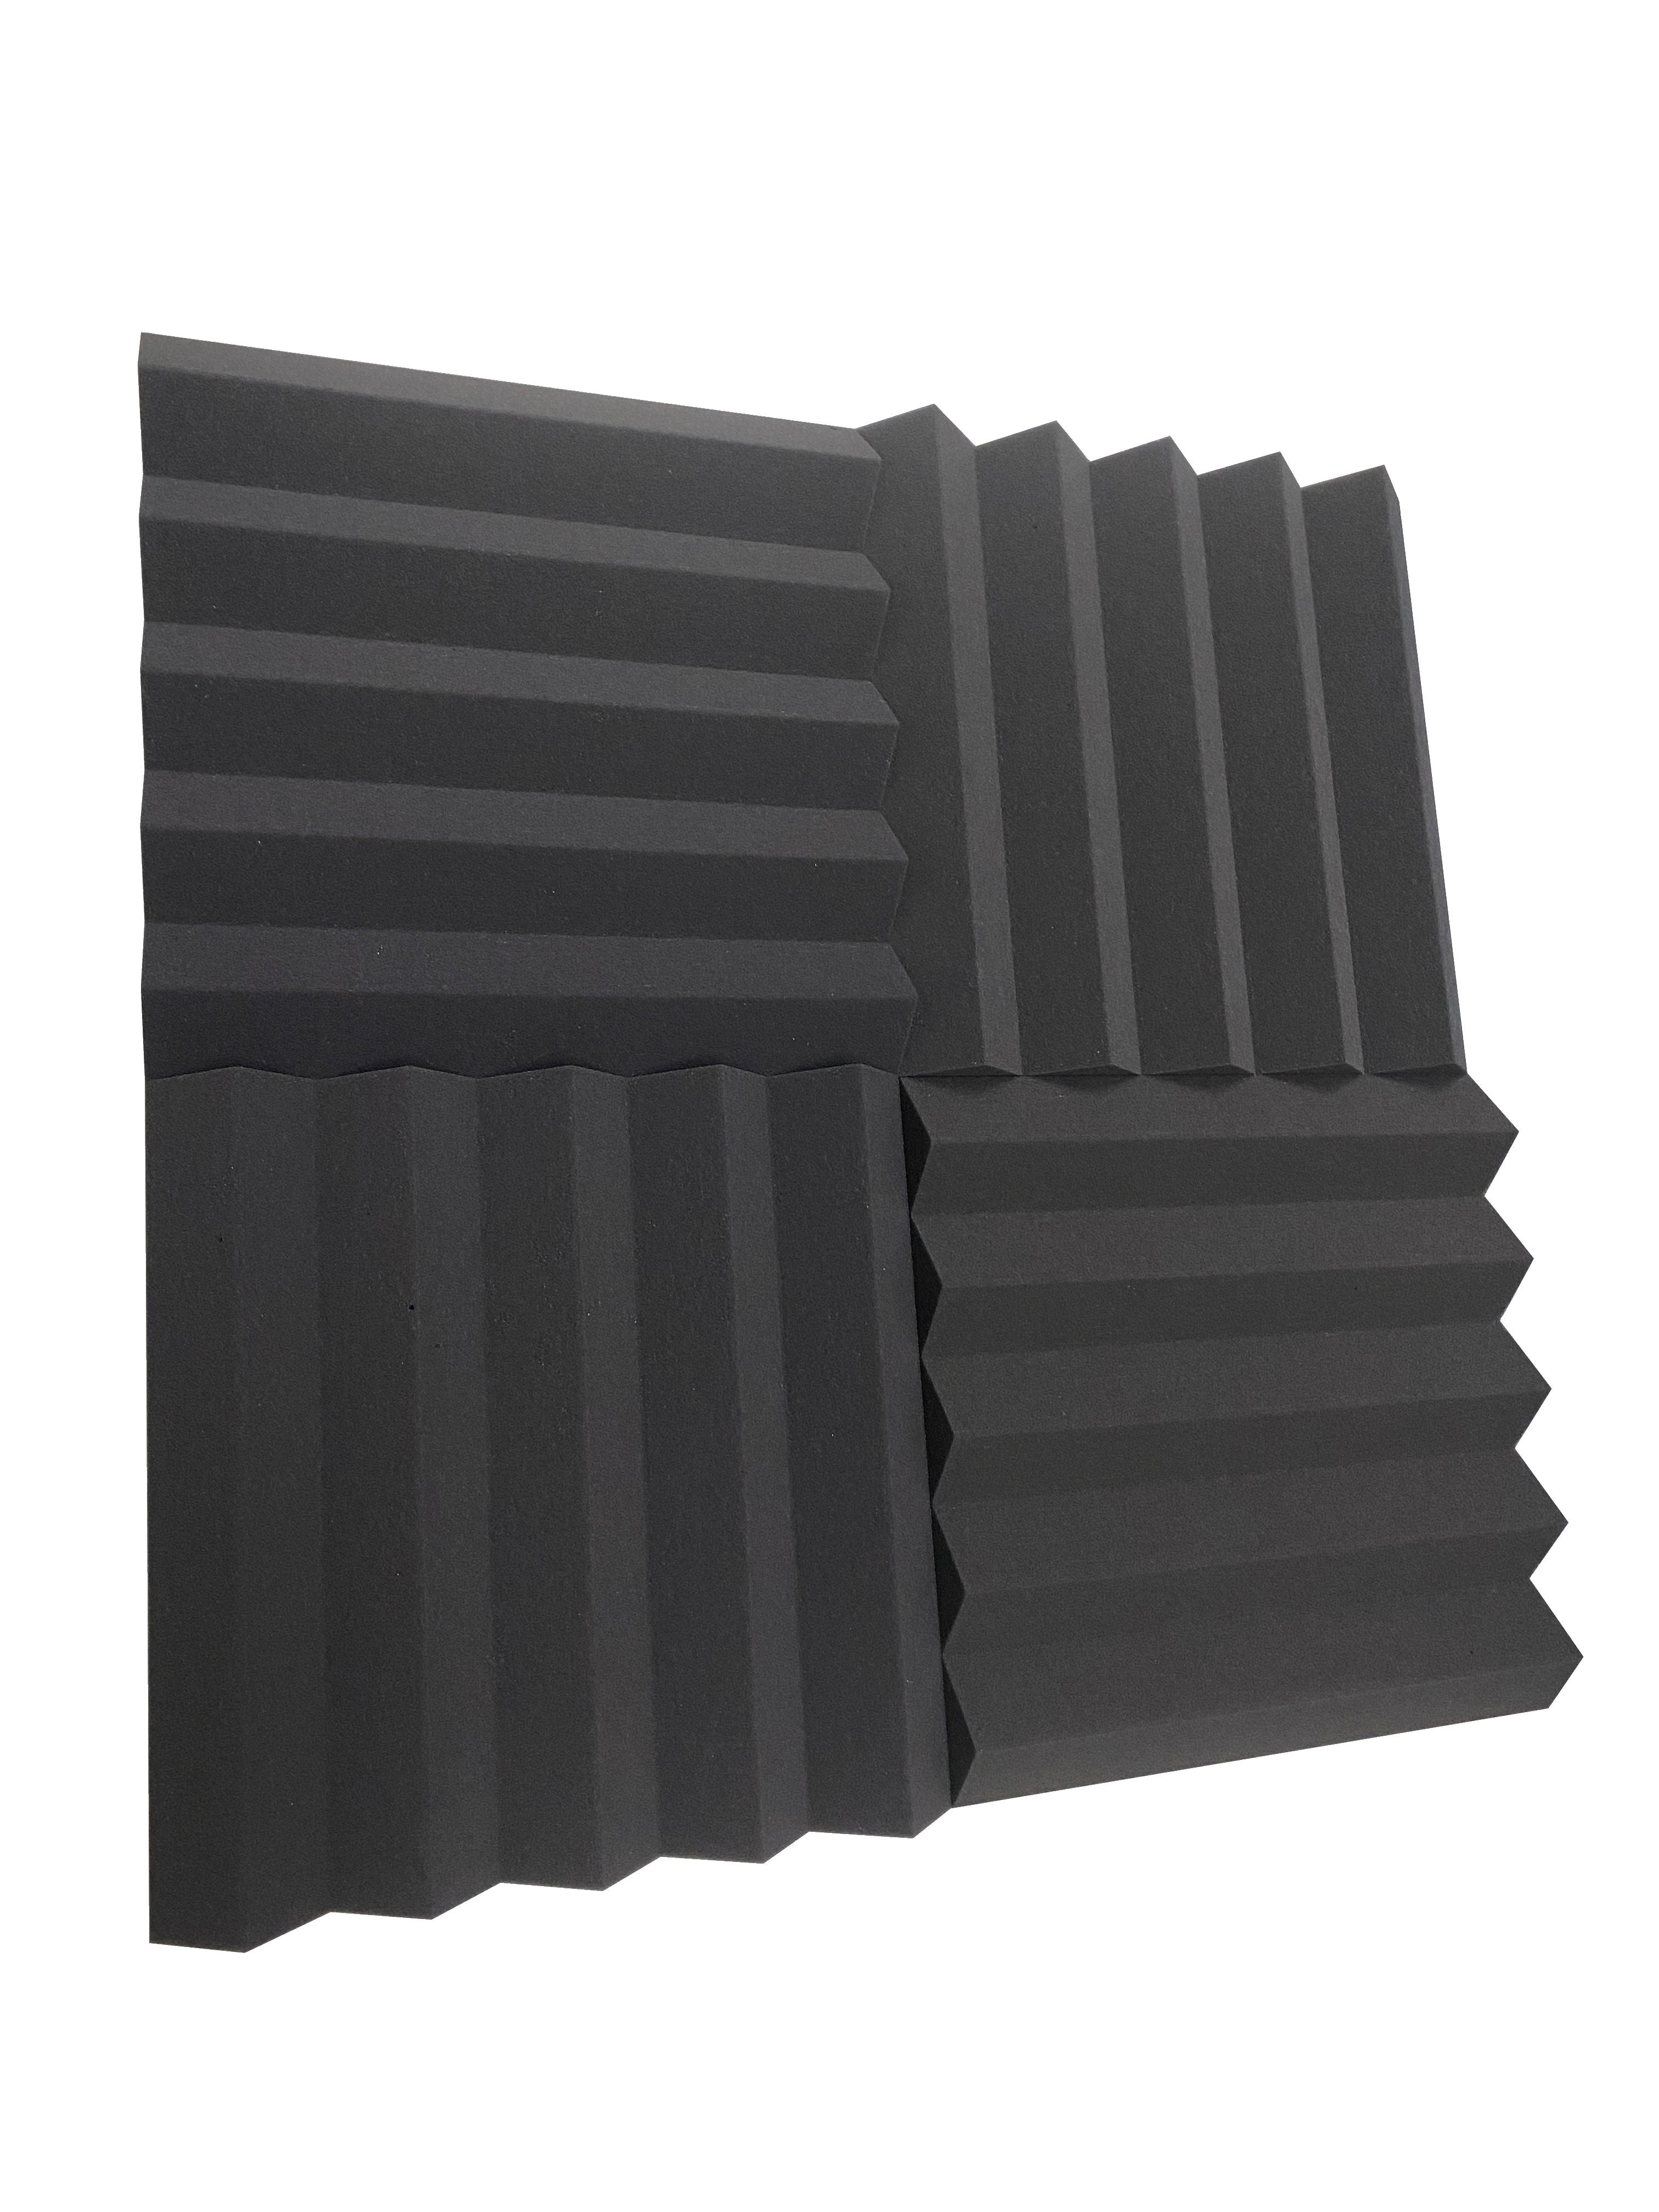 Wedge PRO Combo Acoustic Studio Foam Tile Kit – 42 Fliesen, 13,92 m² Abdeckung-7